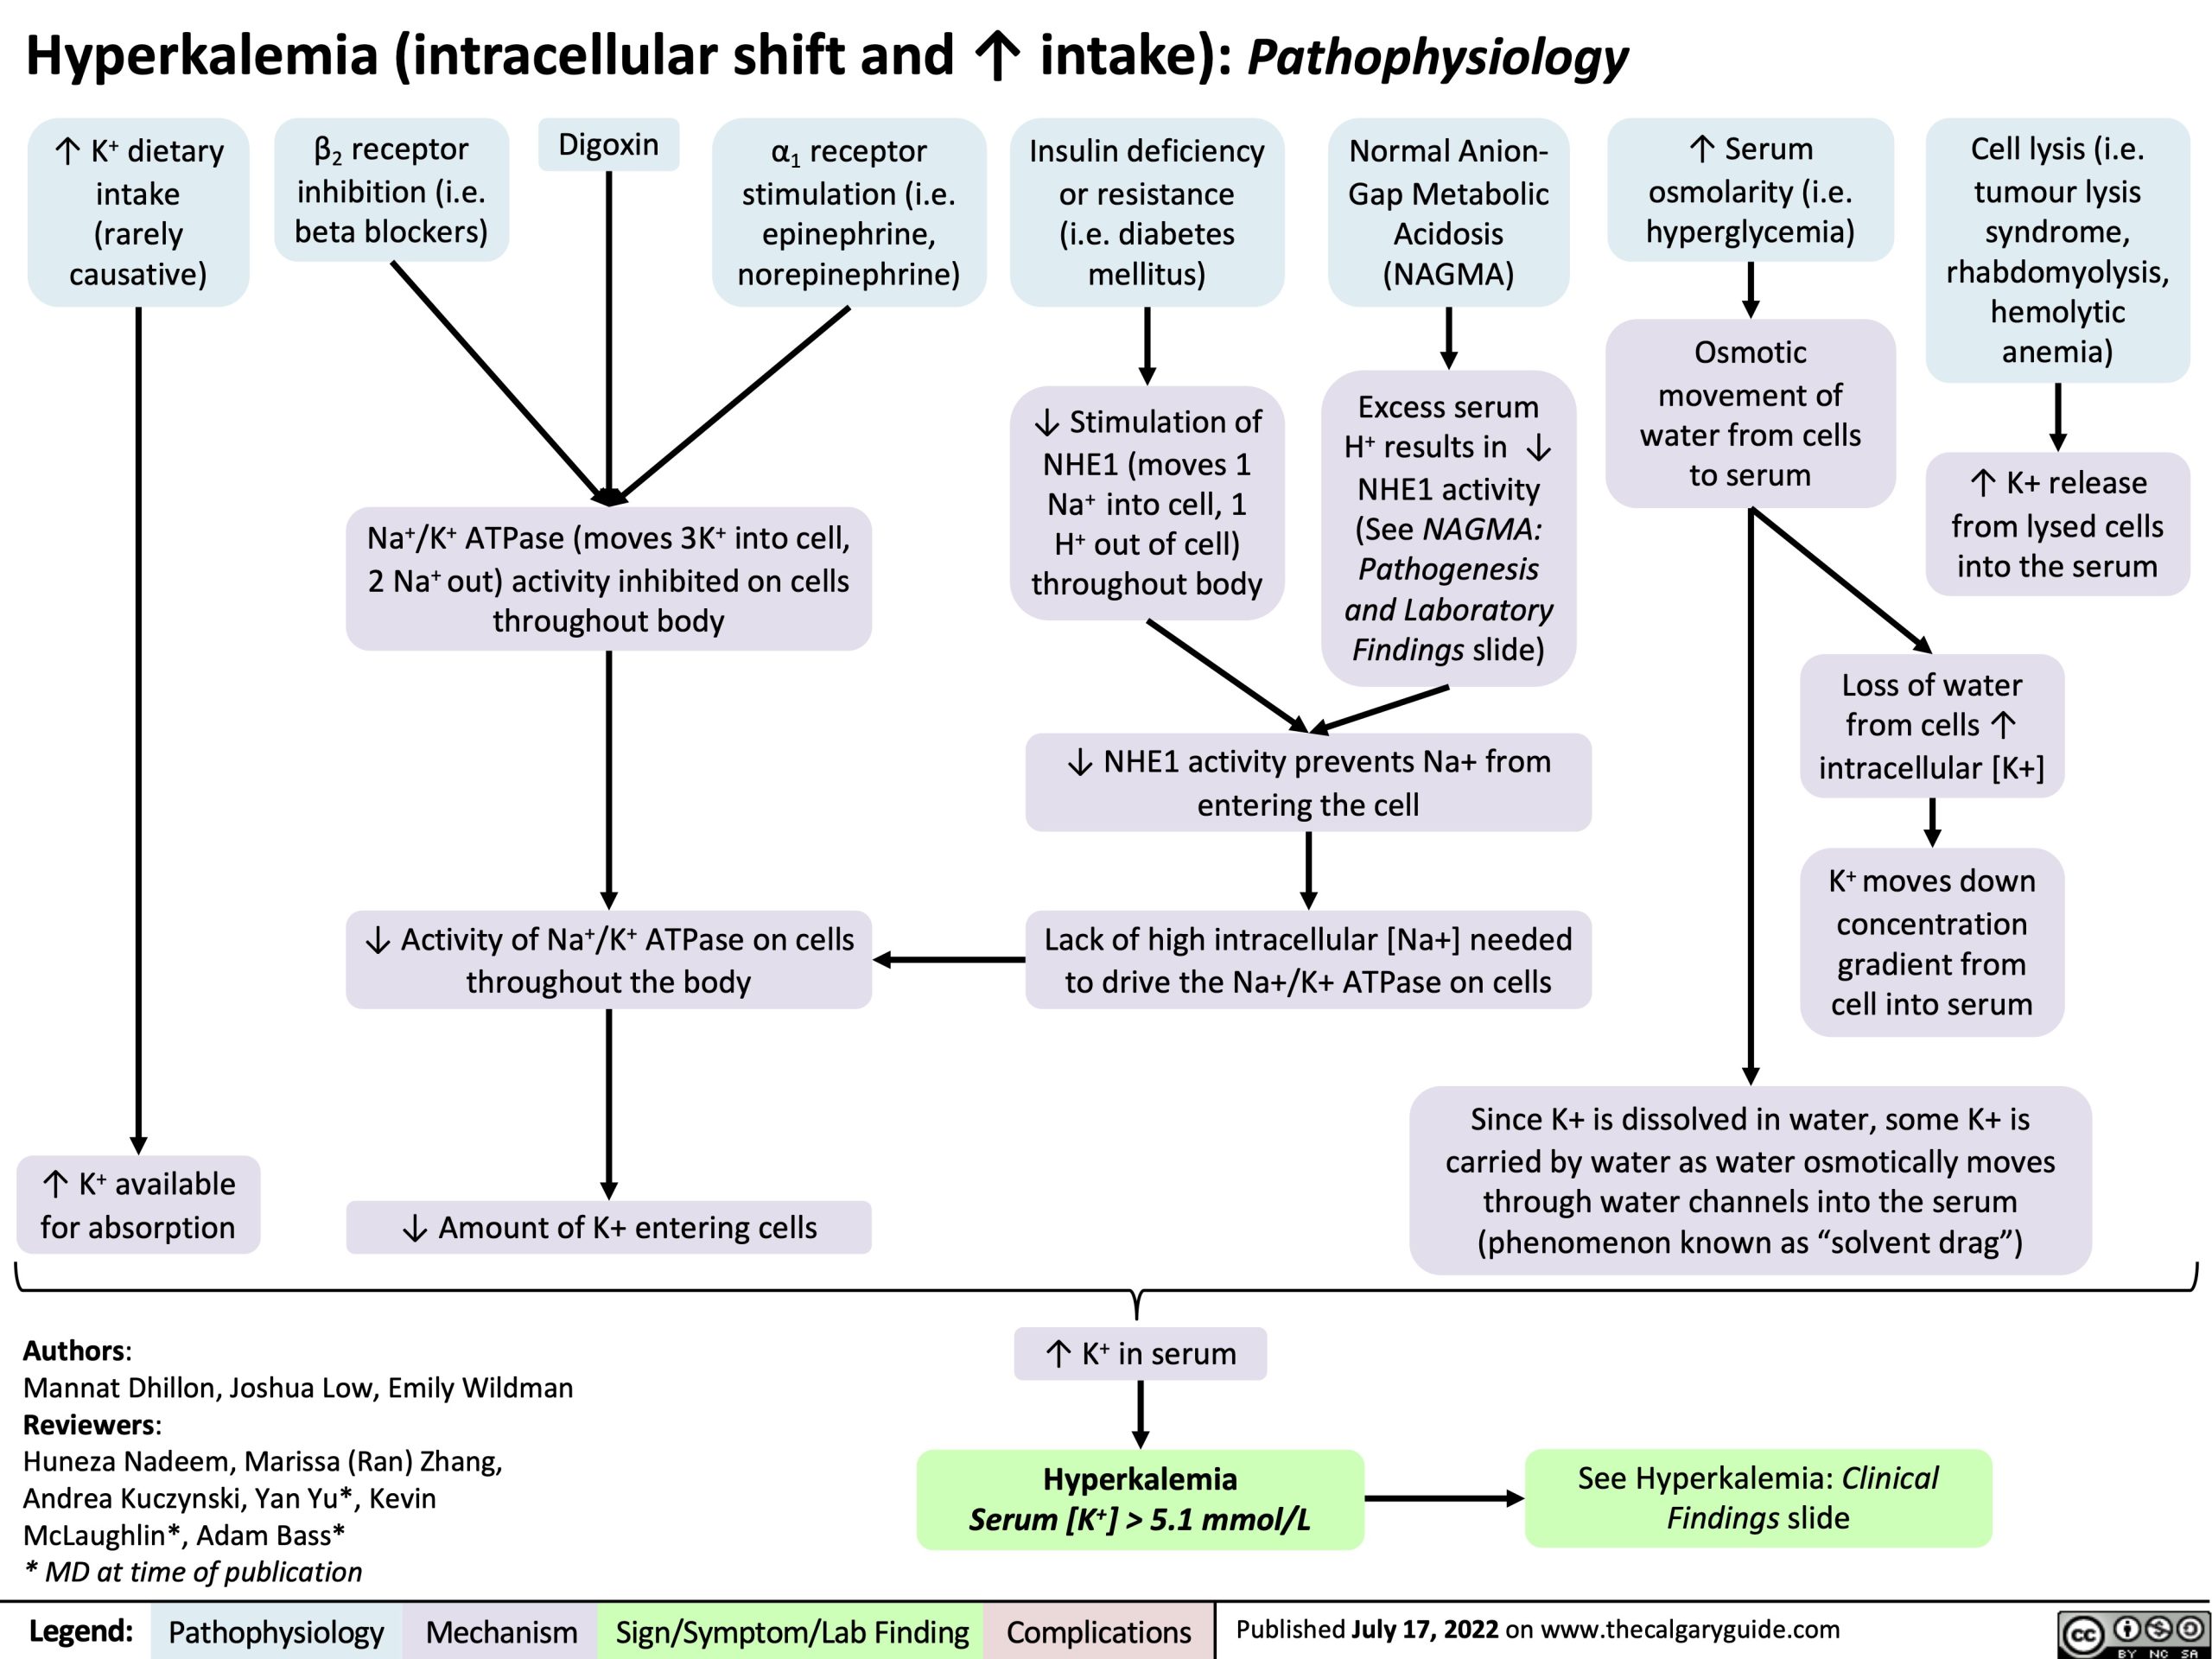 hyperkalemia-pathophysiology-intracellular-shift-and-intake